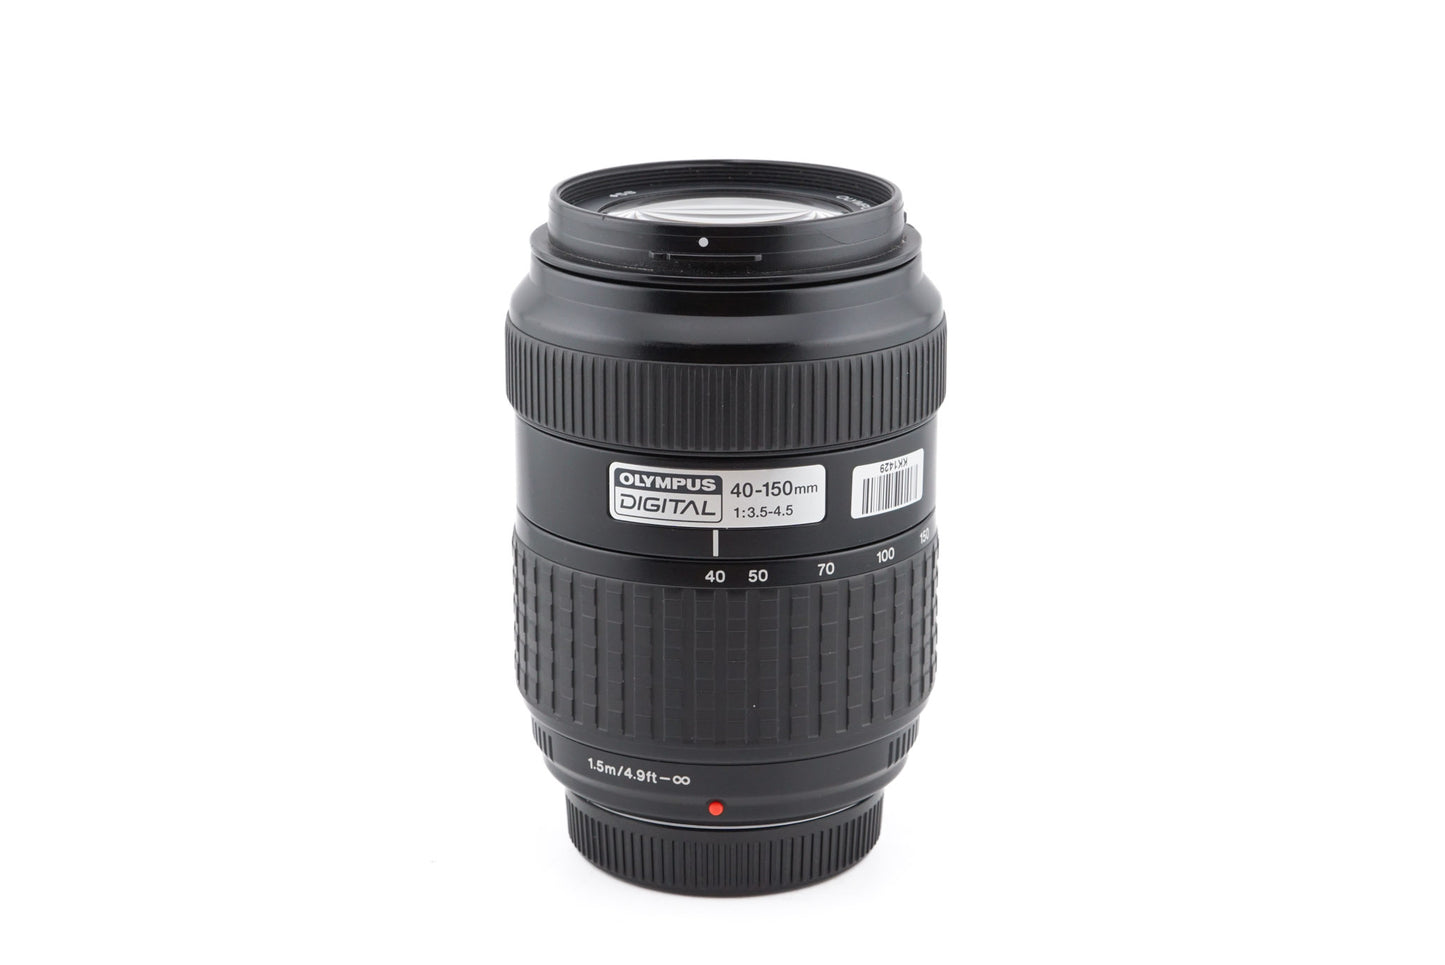 Olympus 40-150mm f3.5-4.5 Zuiko Digital - Lens